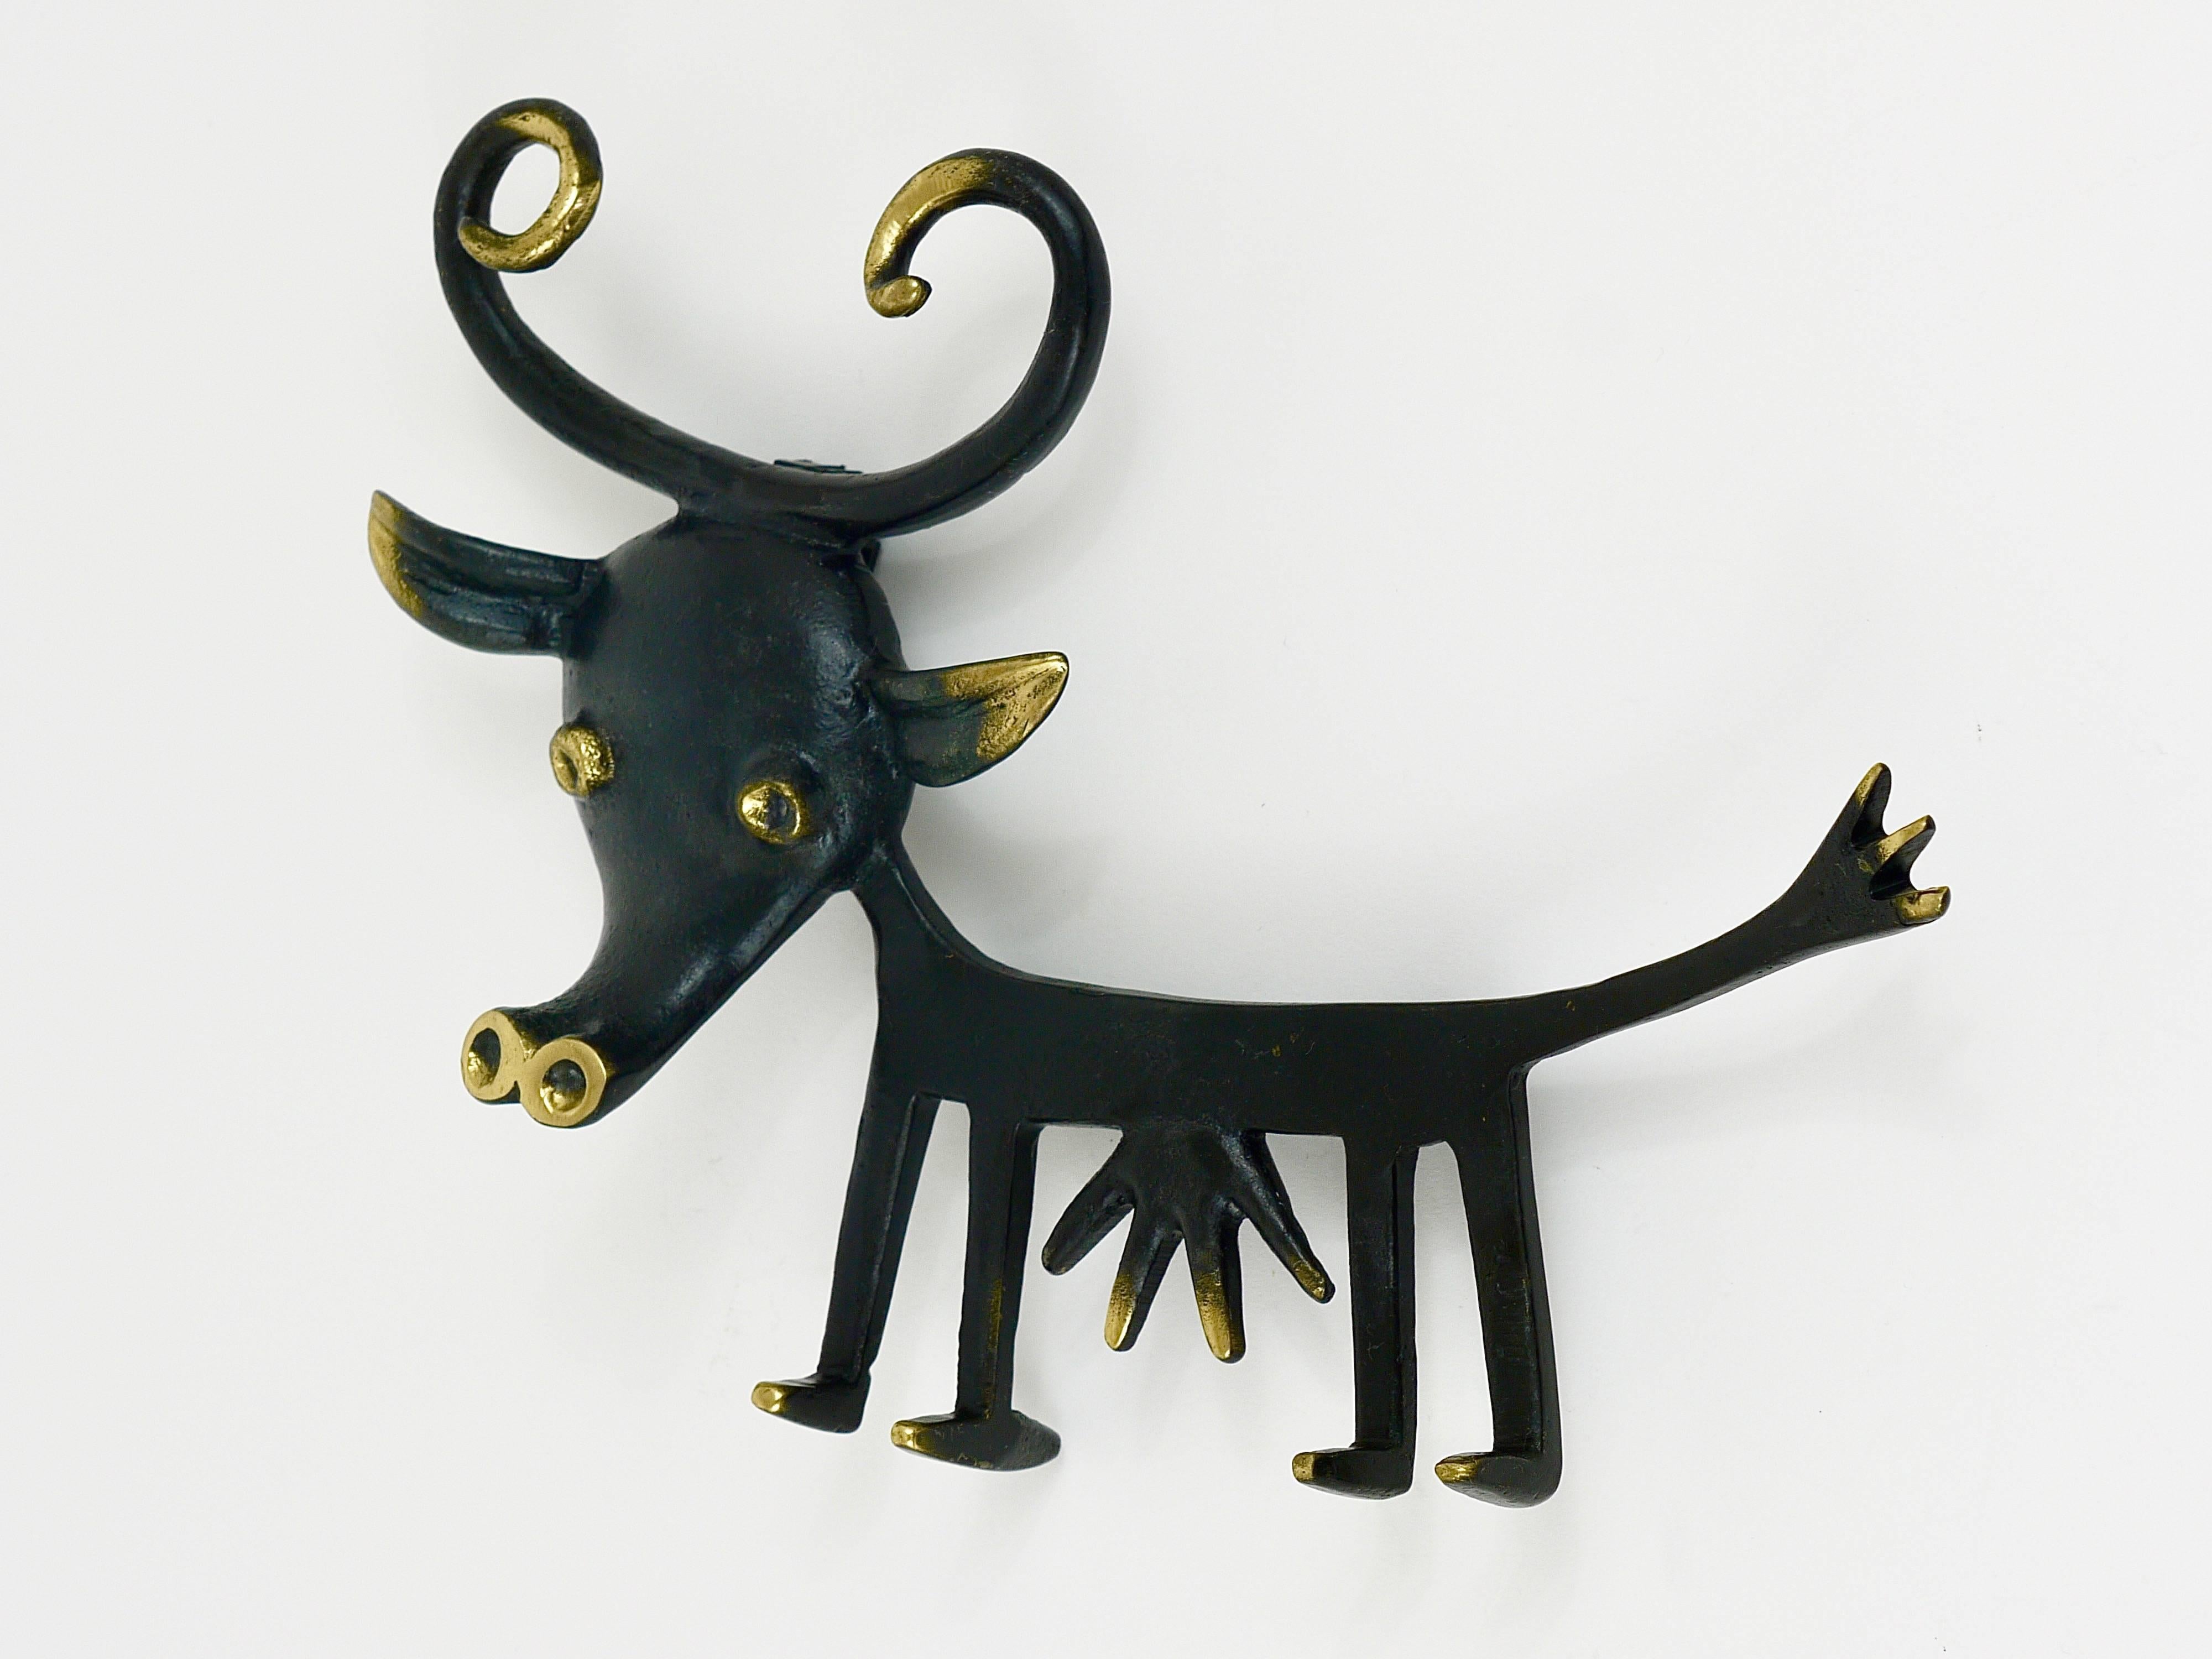 Austrian Walter Bosse Cow Sculpture Brass Key Hanger by Herta Baller, Austria, 1950s For Sale